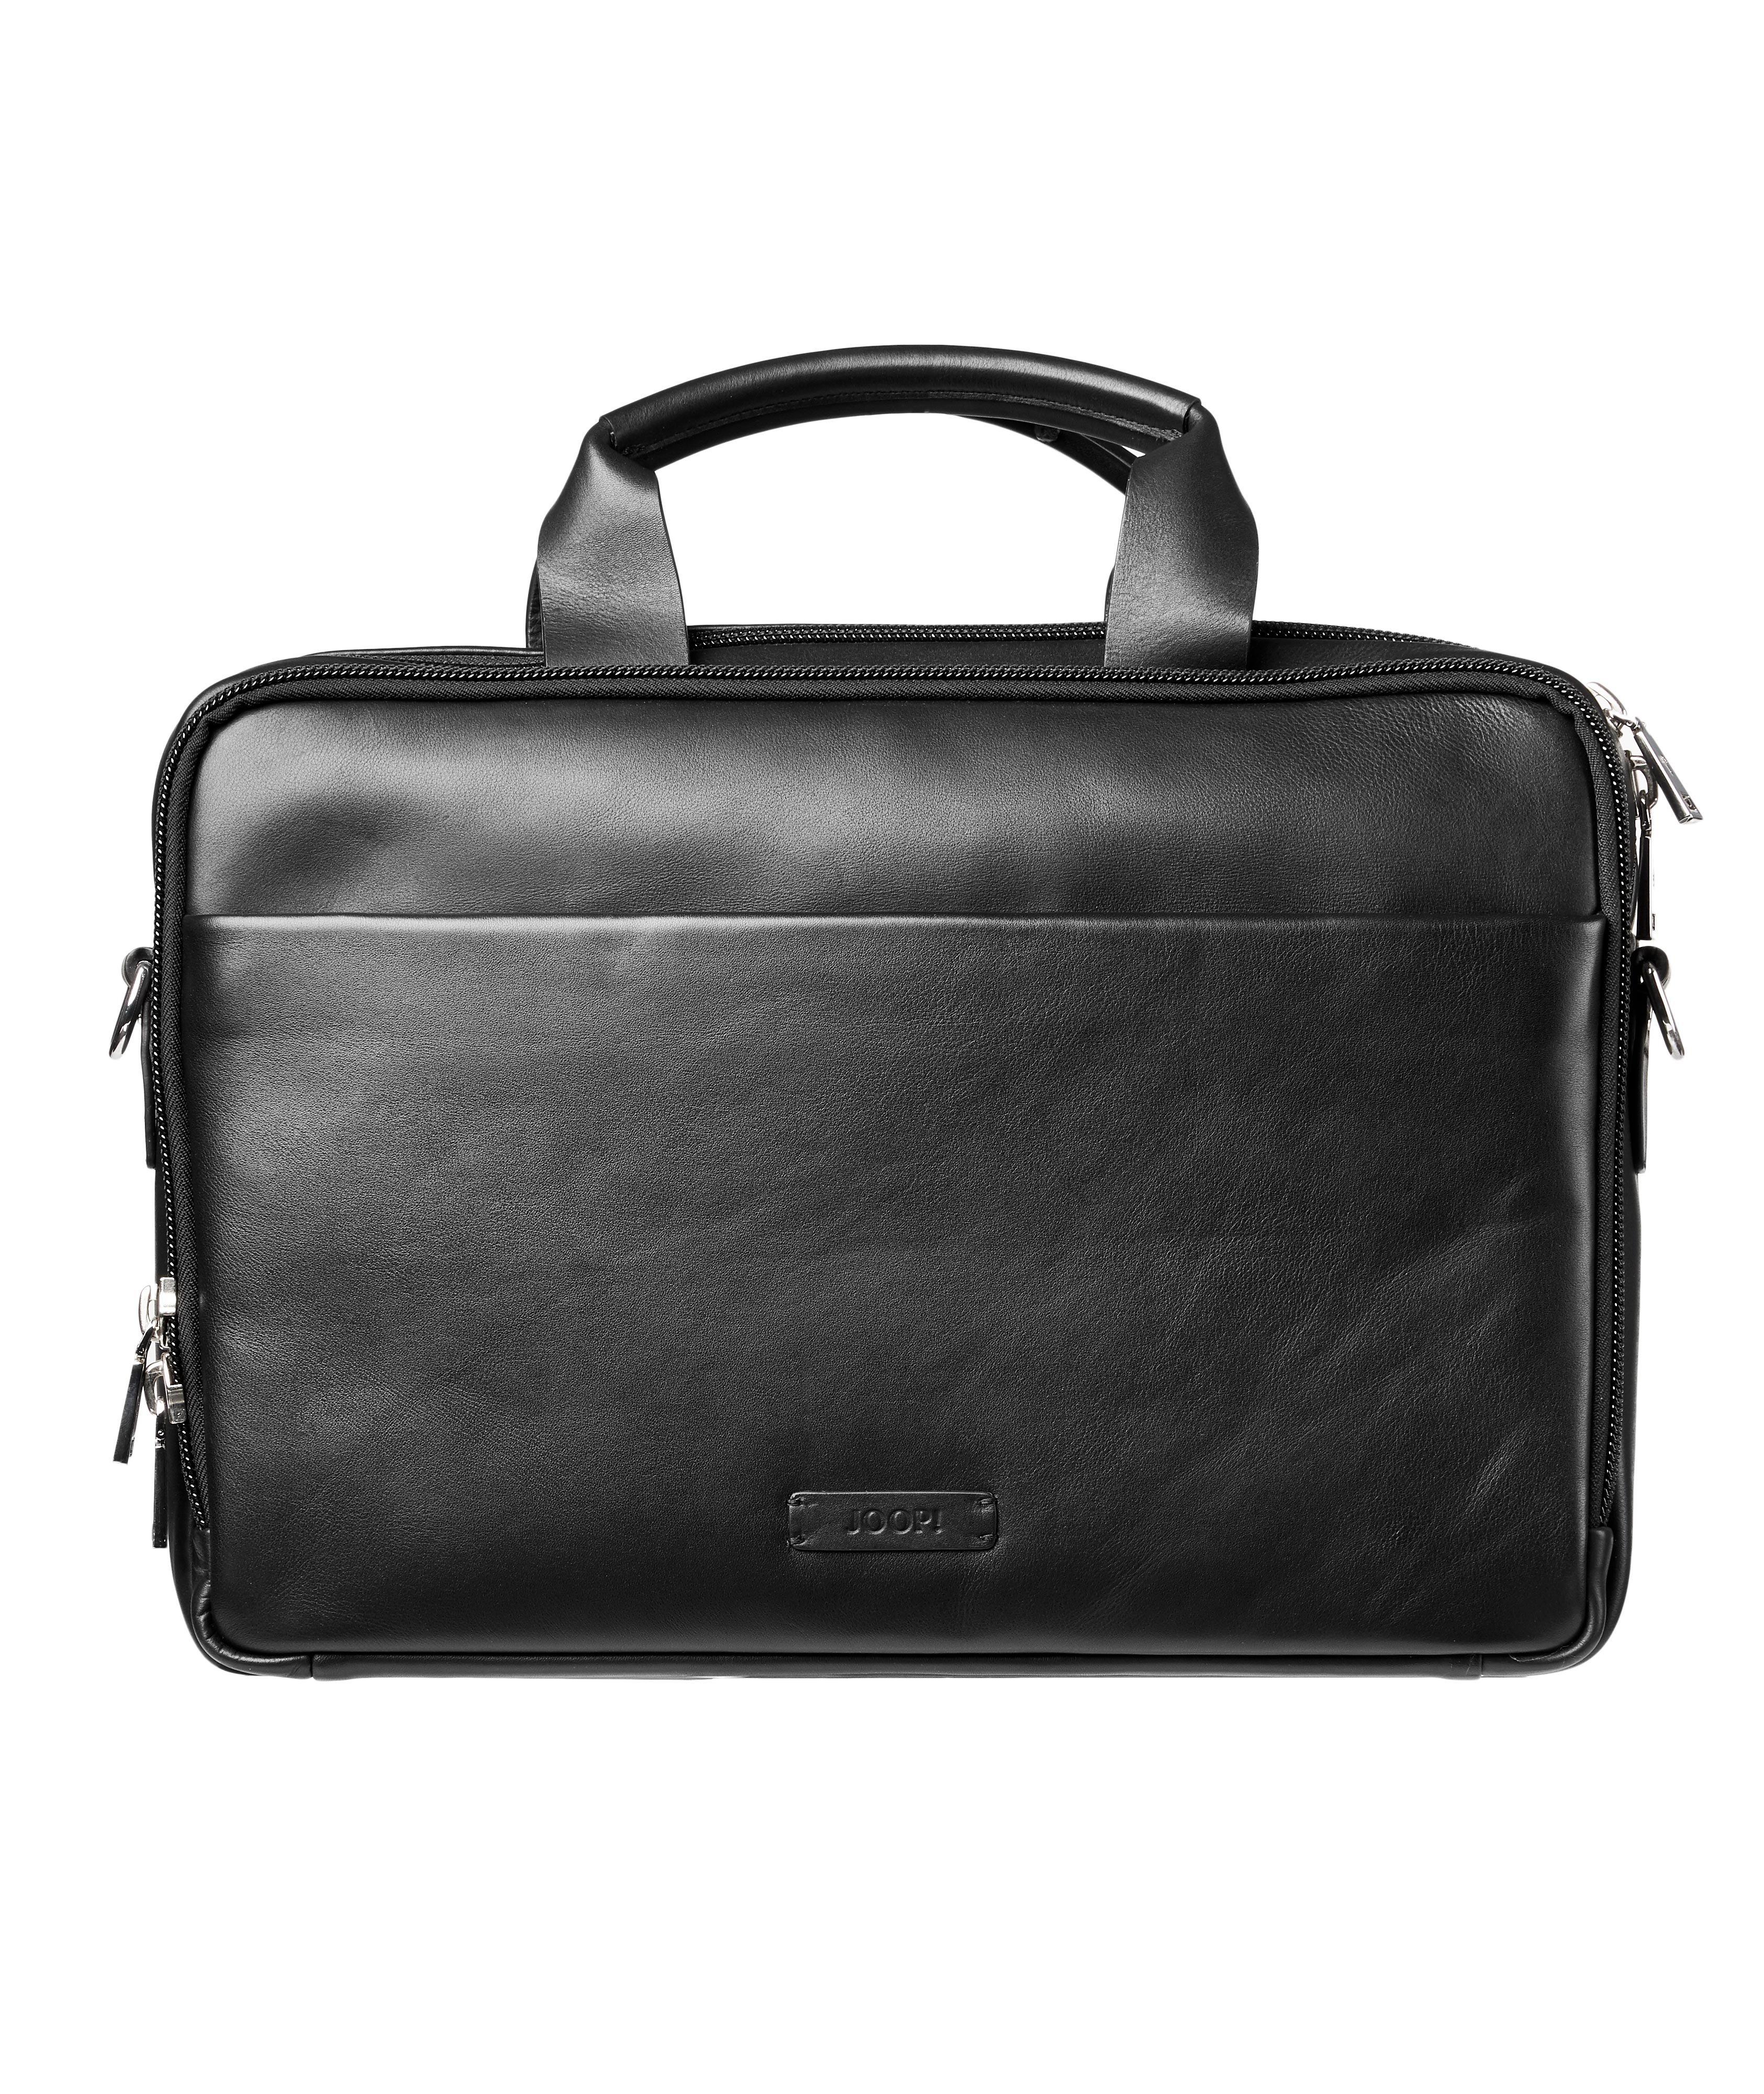 Vetra Pandion Leather Briefcase Bag image 0